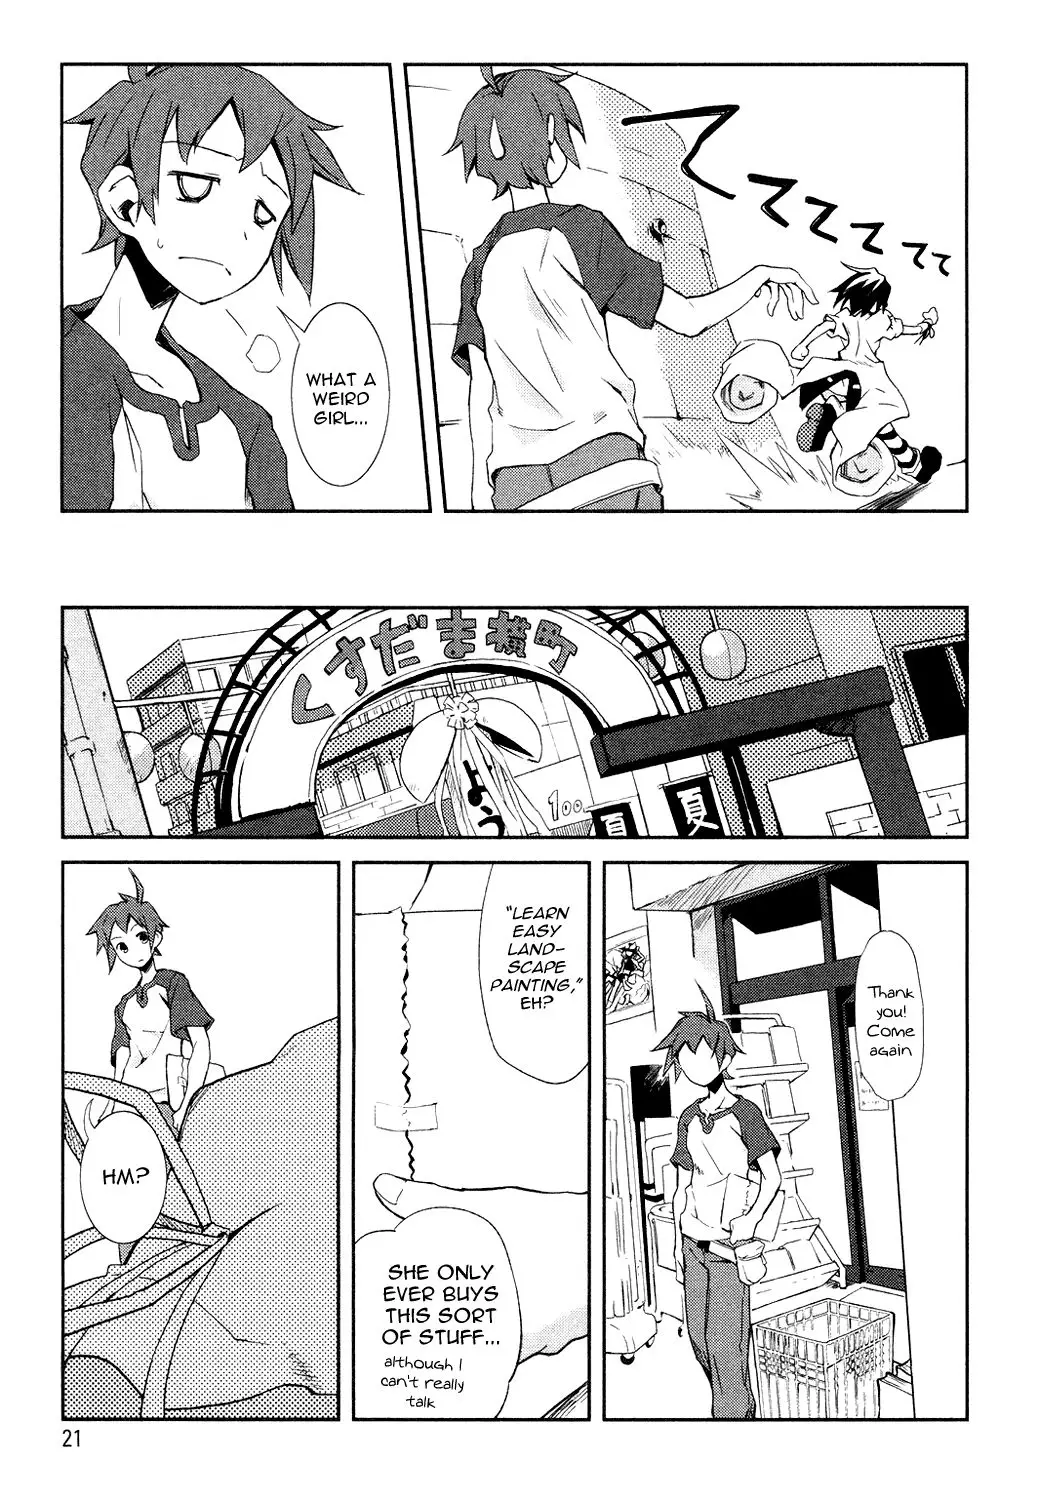 Yumekui Merry - 1 page p_00022